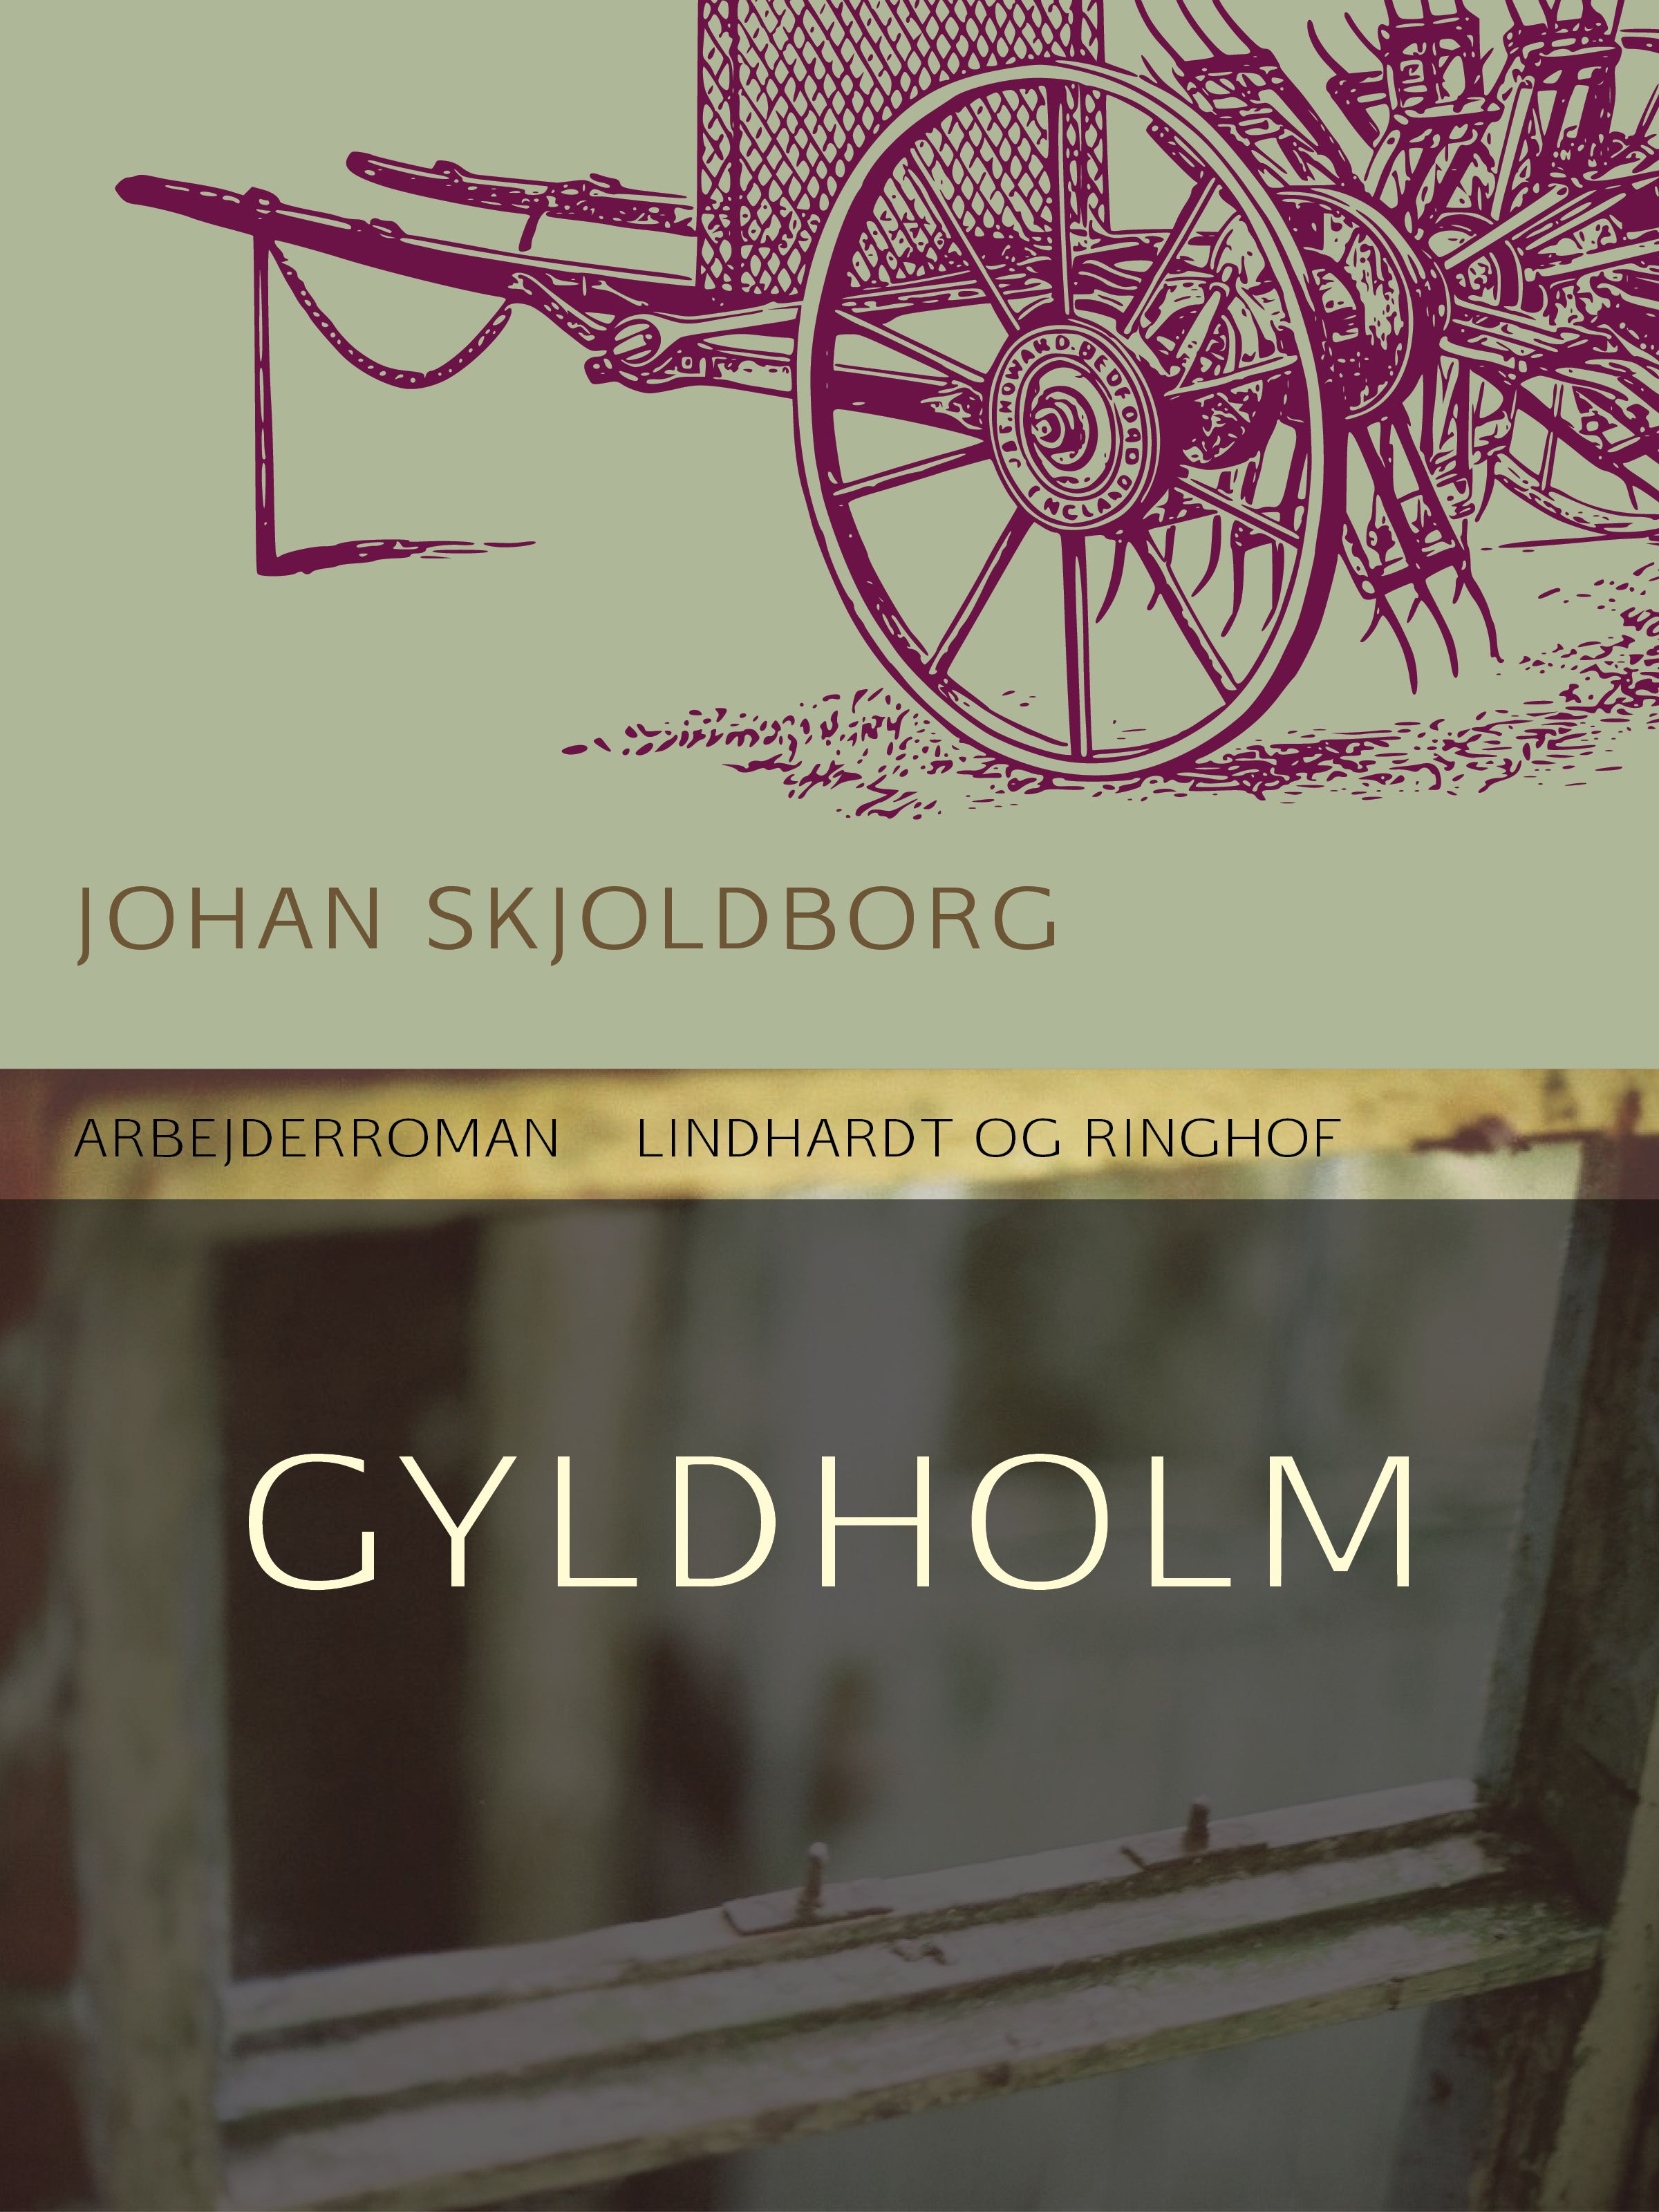 Gyldholm, lydbog af Johan Skjoldborg